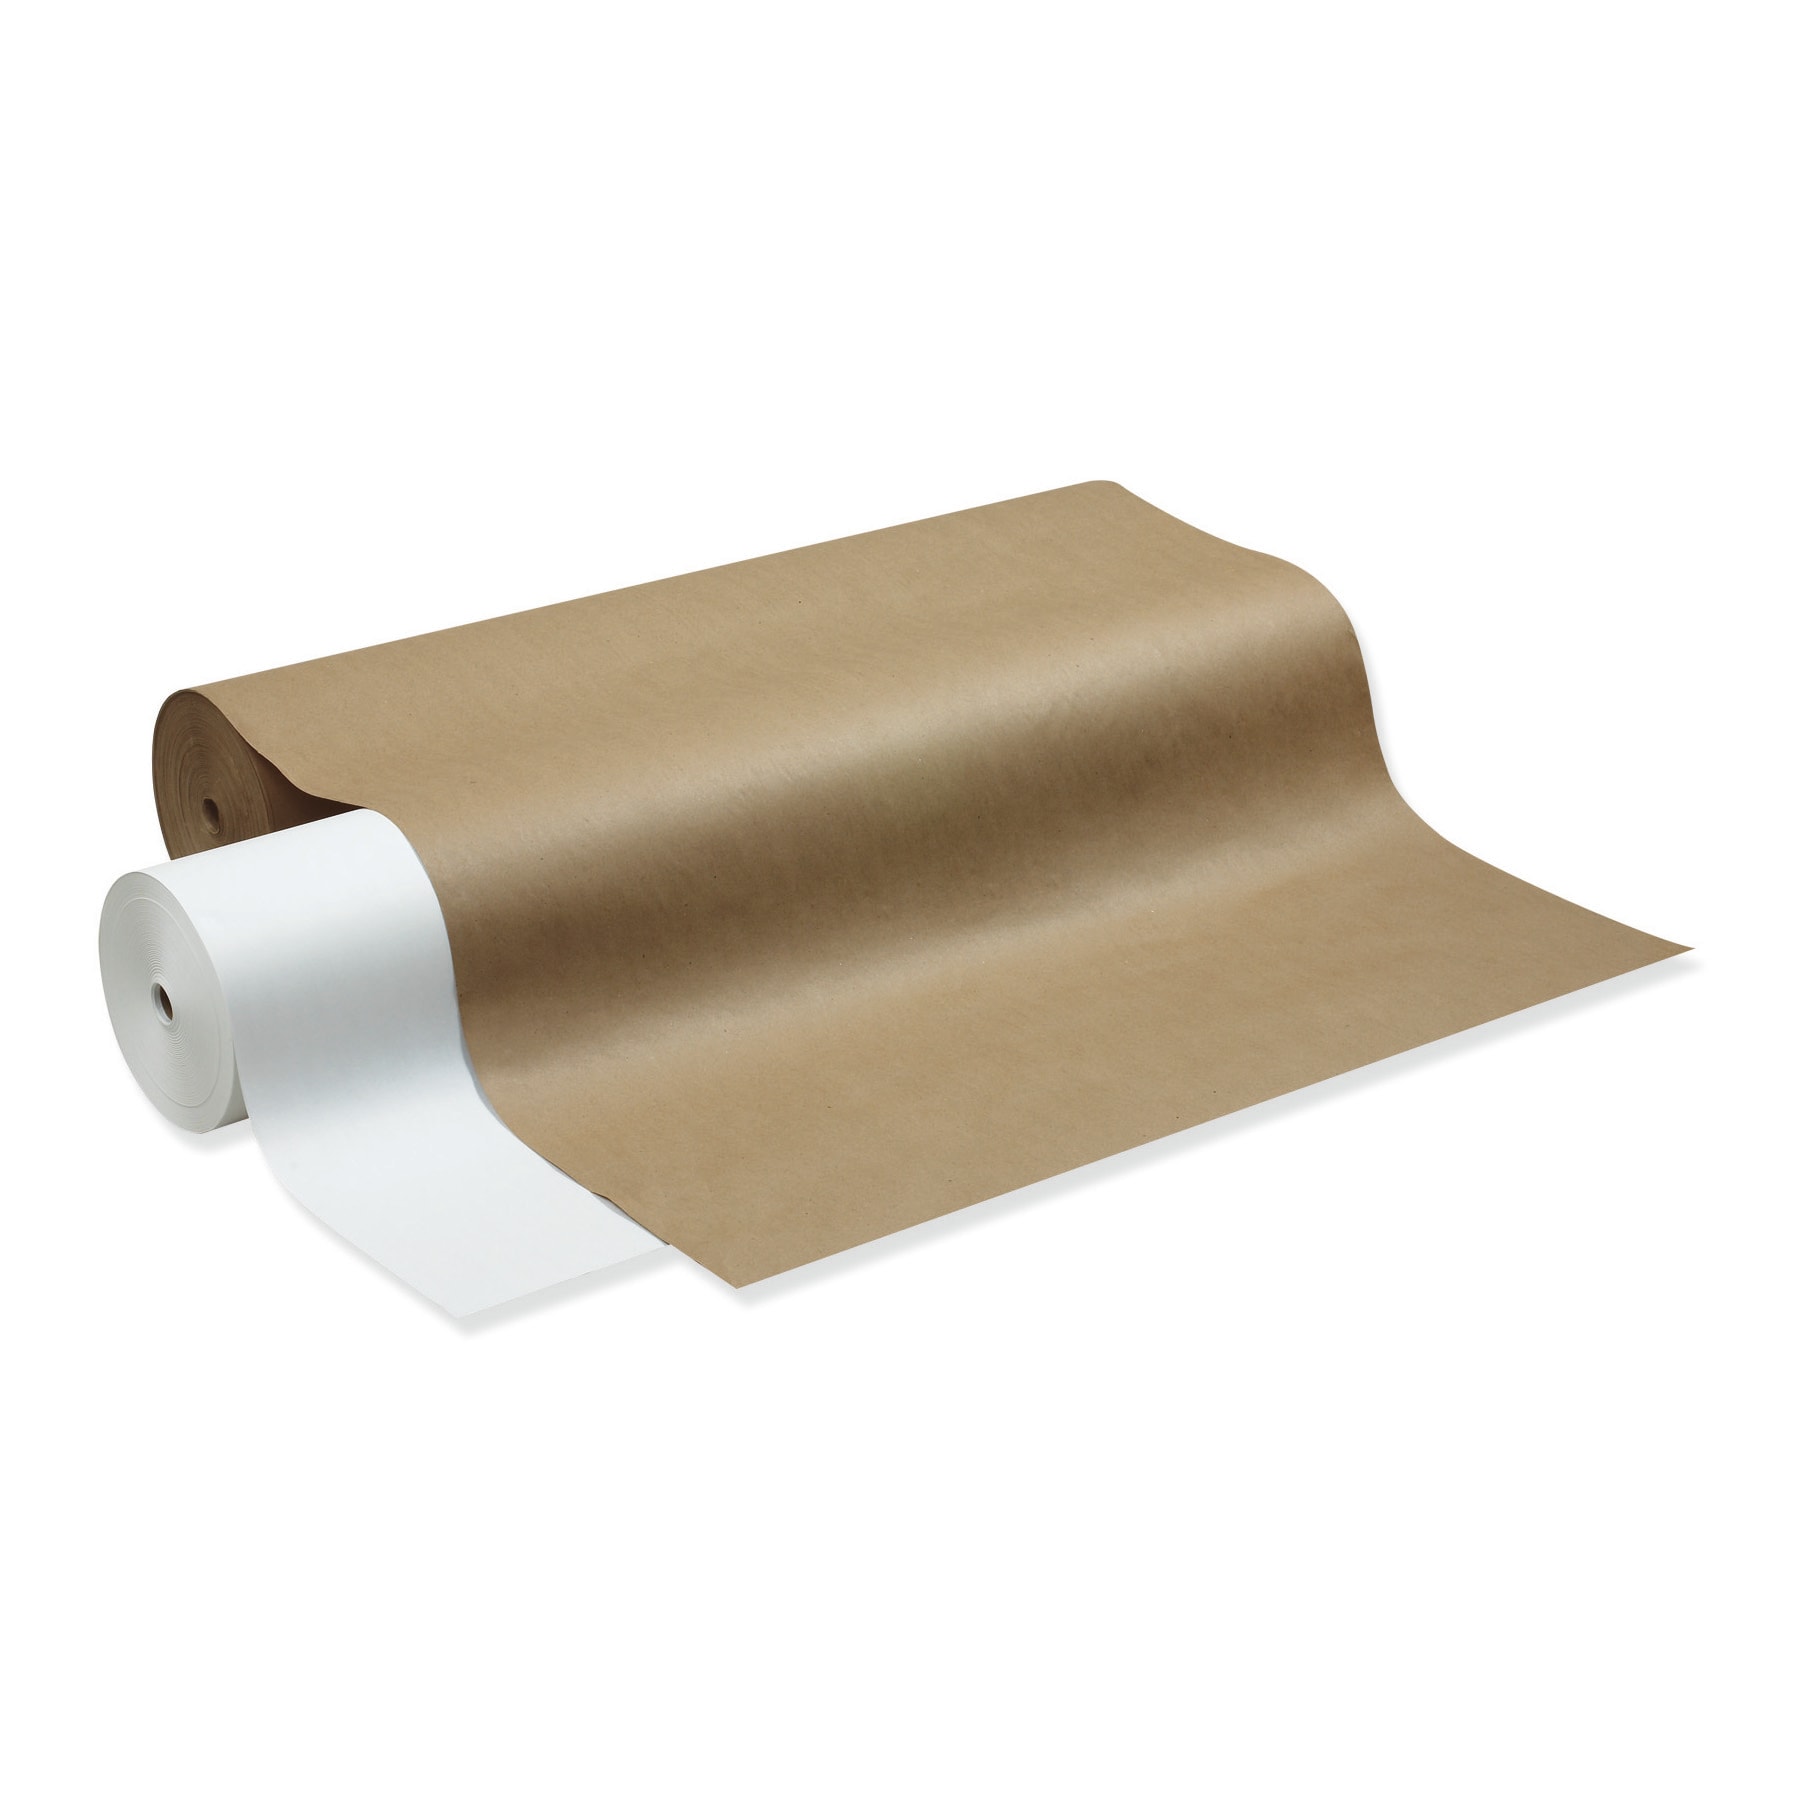 Pacon Kraft Paper Roll, 40 lbs., White Kraft, 24 x 1,000